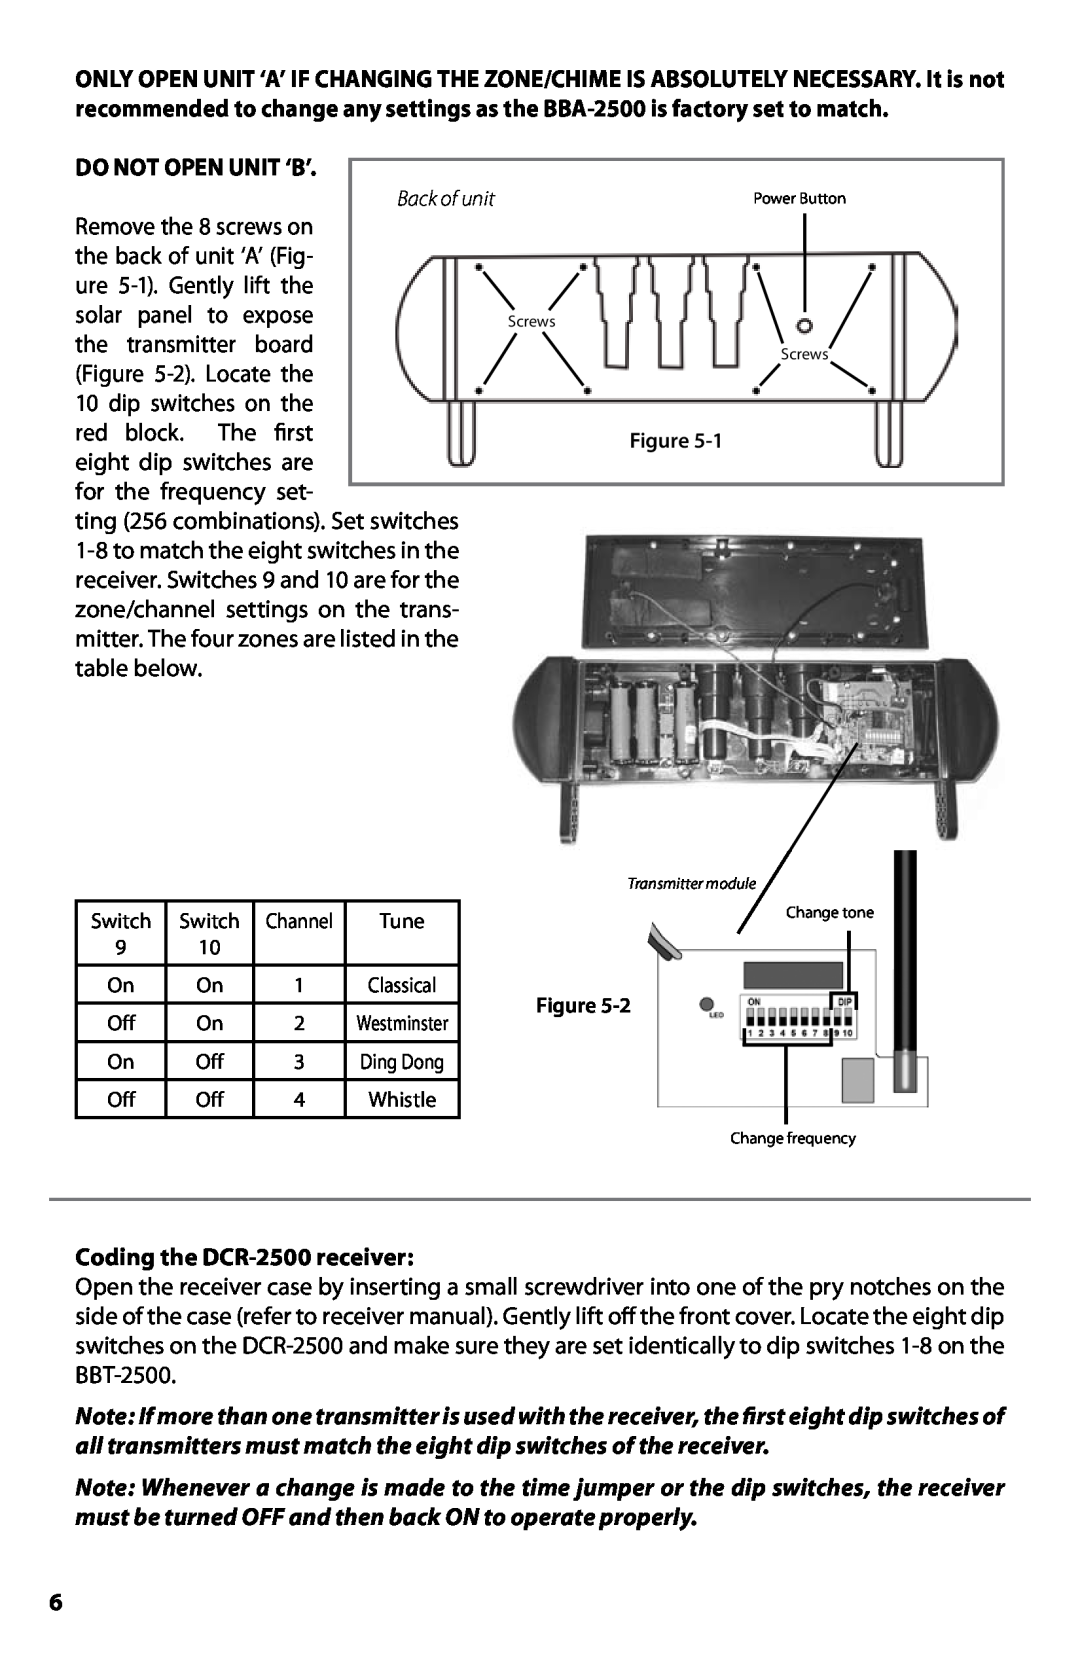 Dakota Alert BBT-2500 manual Do Not Open Unit ‘B’, Coding the DCR-2500receiver 